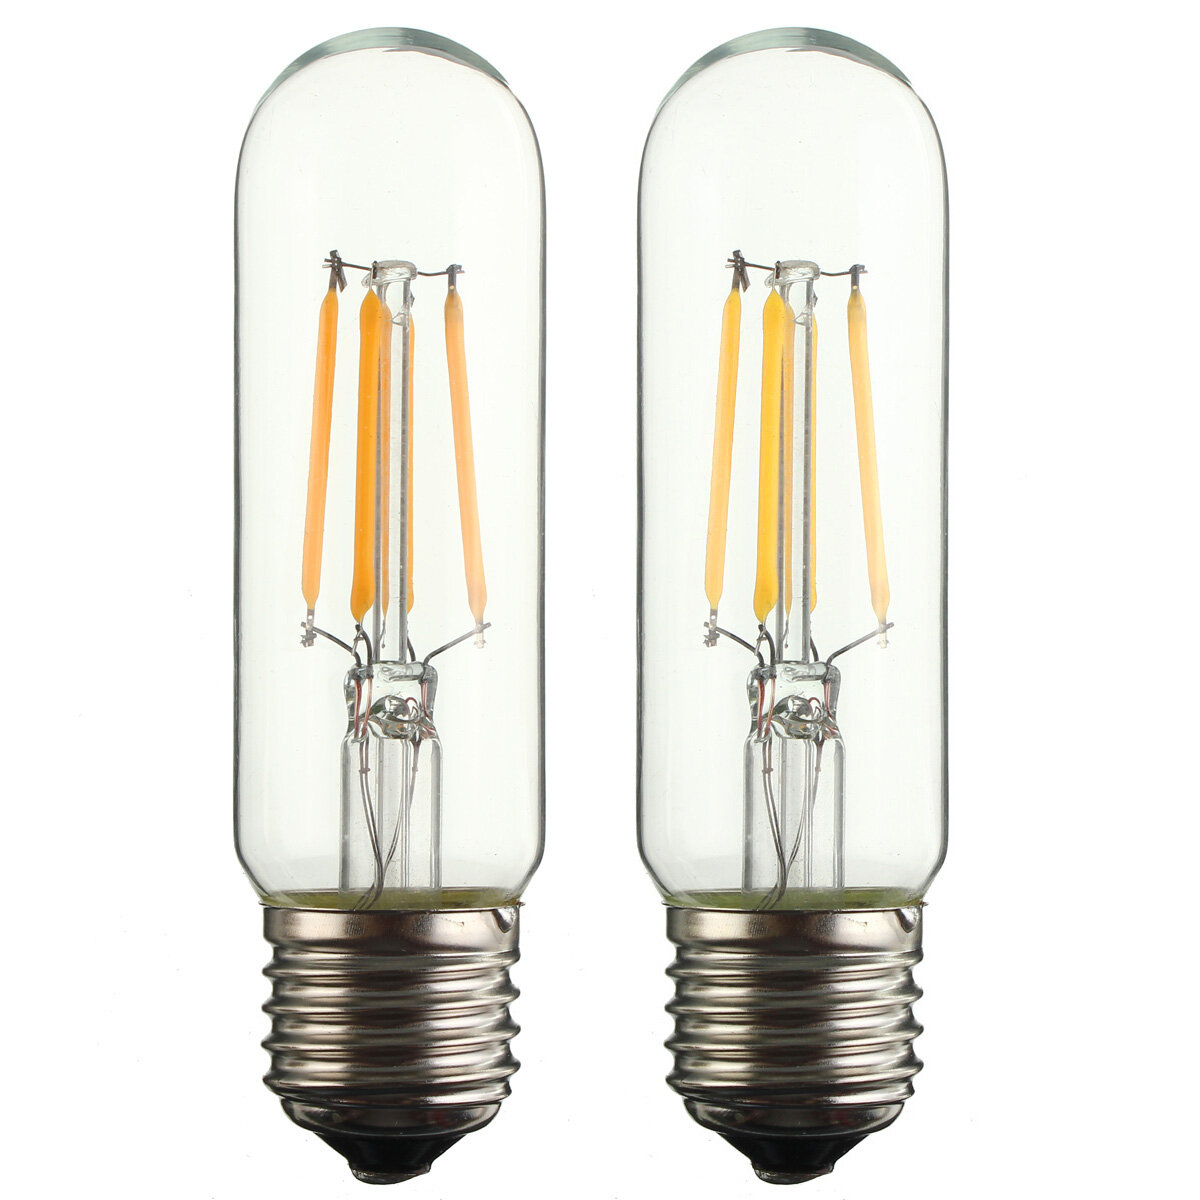 kingso E27 E26 T10 Vintage antieke stijl lampen Edison industriële gloeilamp licht